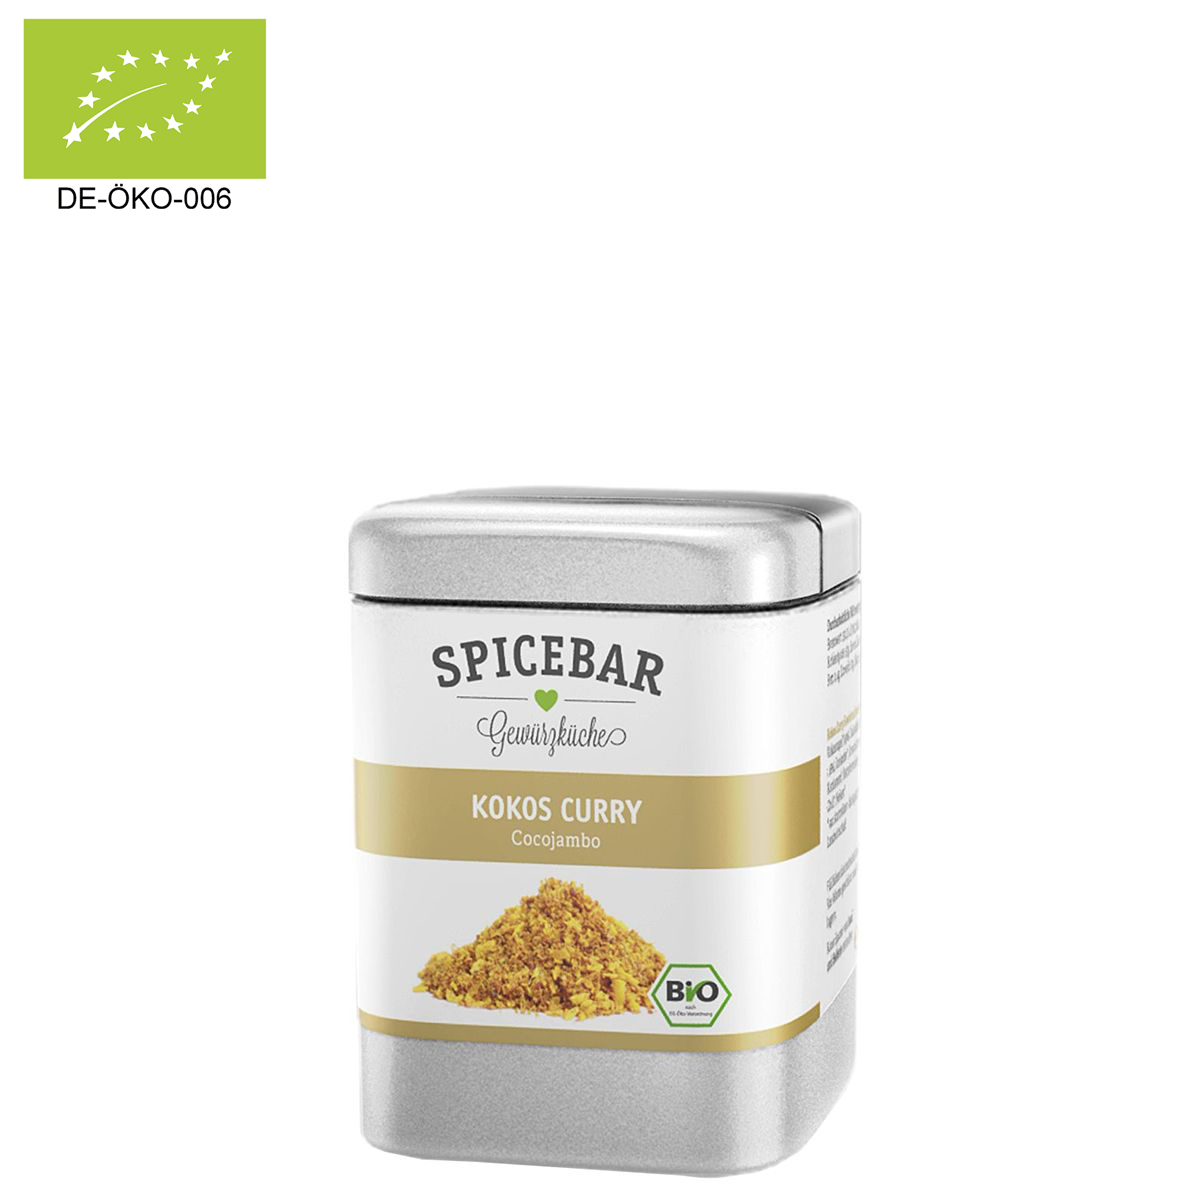 Spicebar Kokos Curry, bio Inhalt 70g